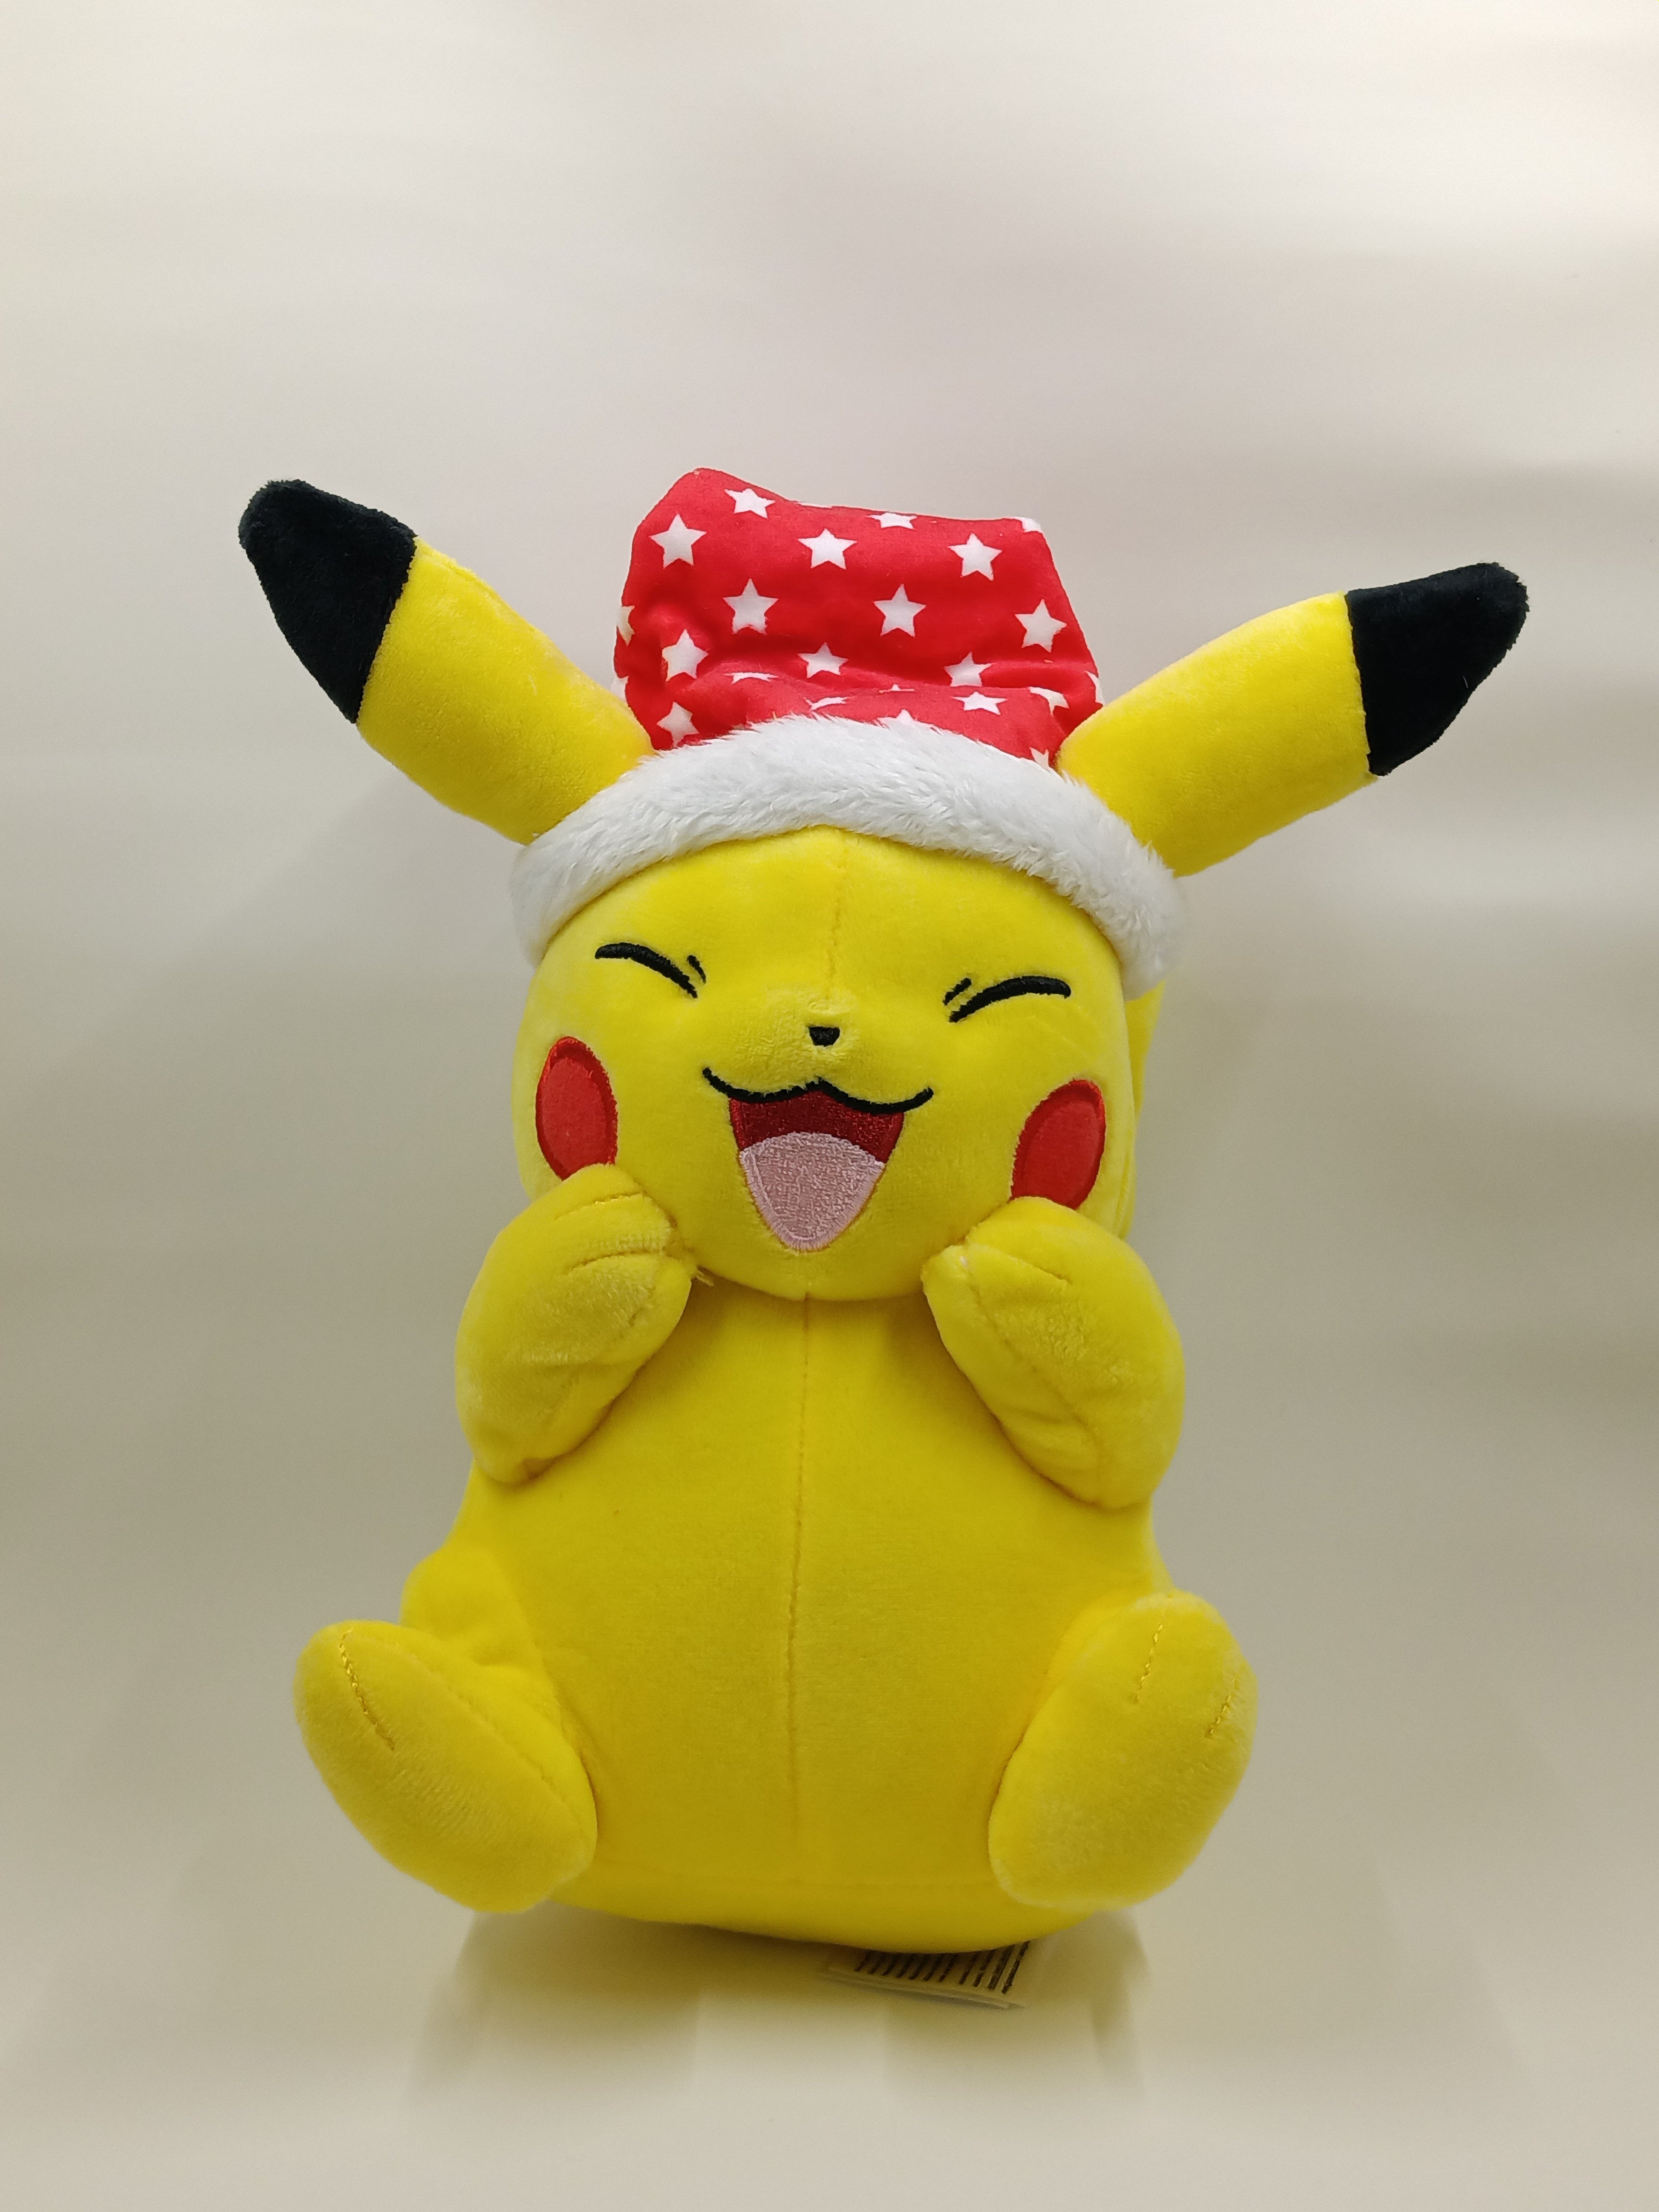 Pikachu (Happy Holiday) 9 INCH PLUSH